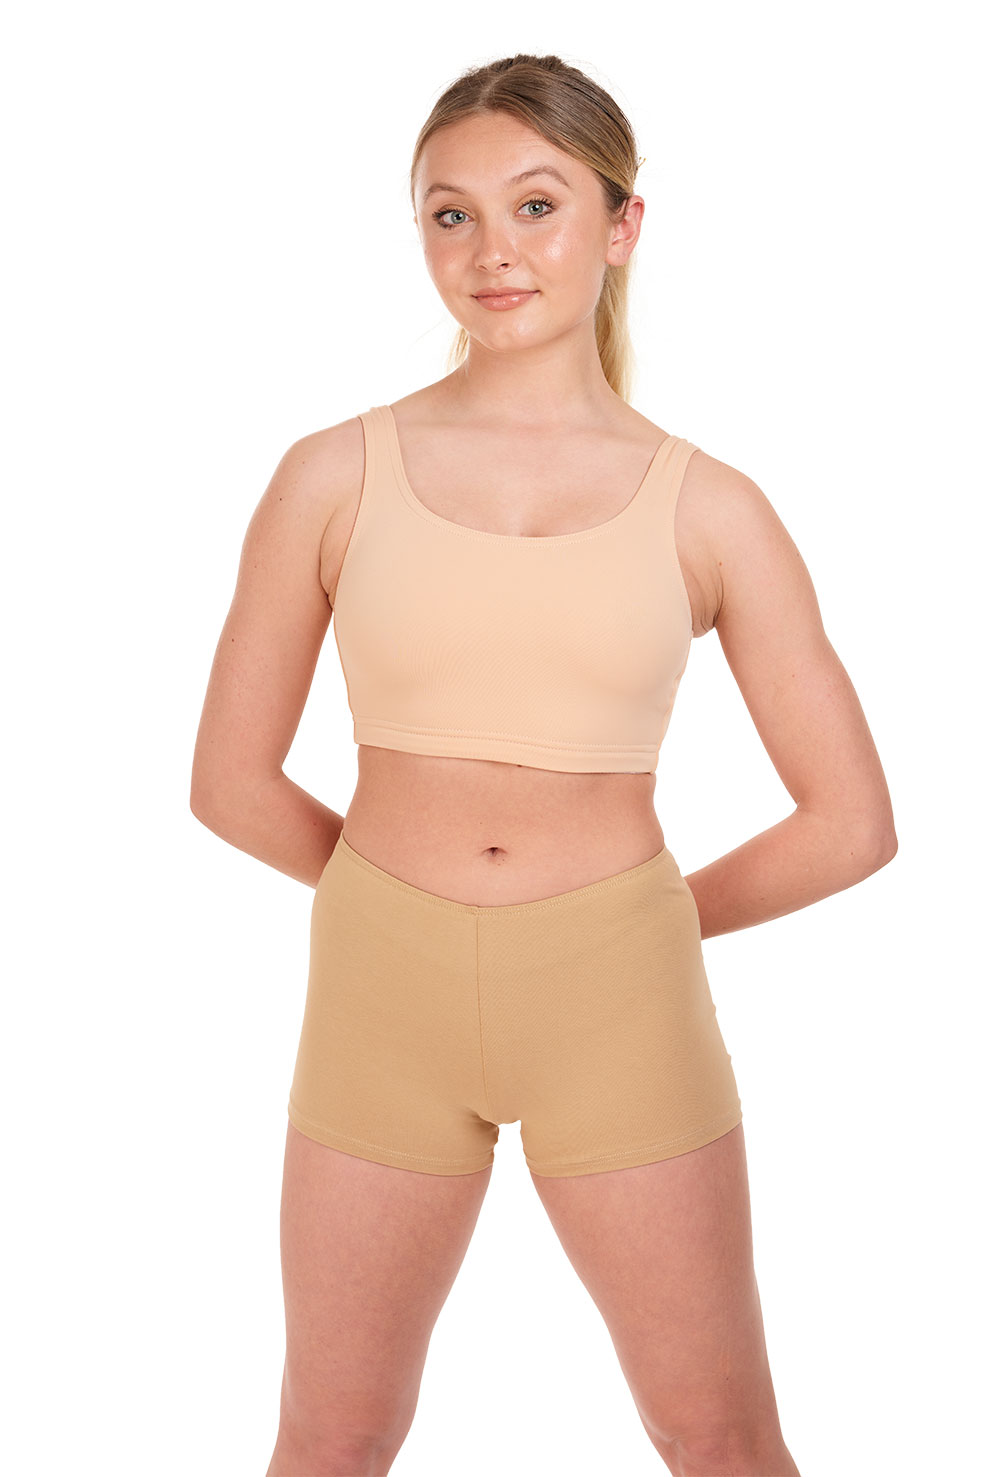 https://dancewear-cdn-1.s3.eu-west-2.amazonaws.com/wp-content/uploads/2020/06/18151535/Danz-ez-Minimal-Bounce-Bra-Nude.jpg